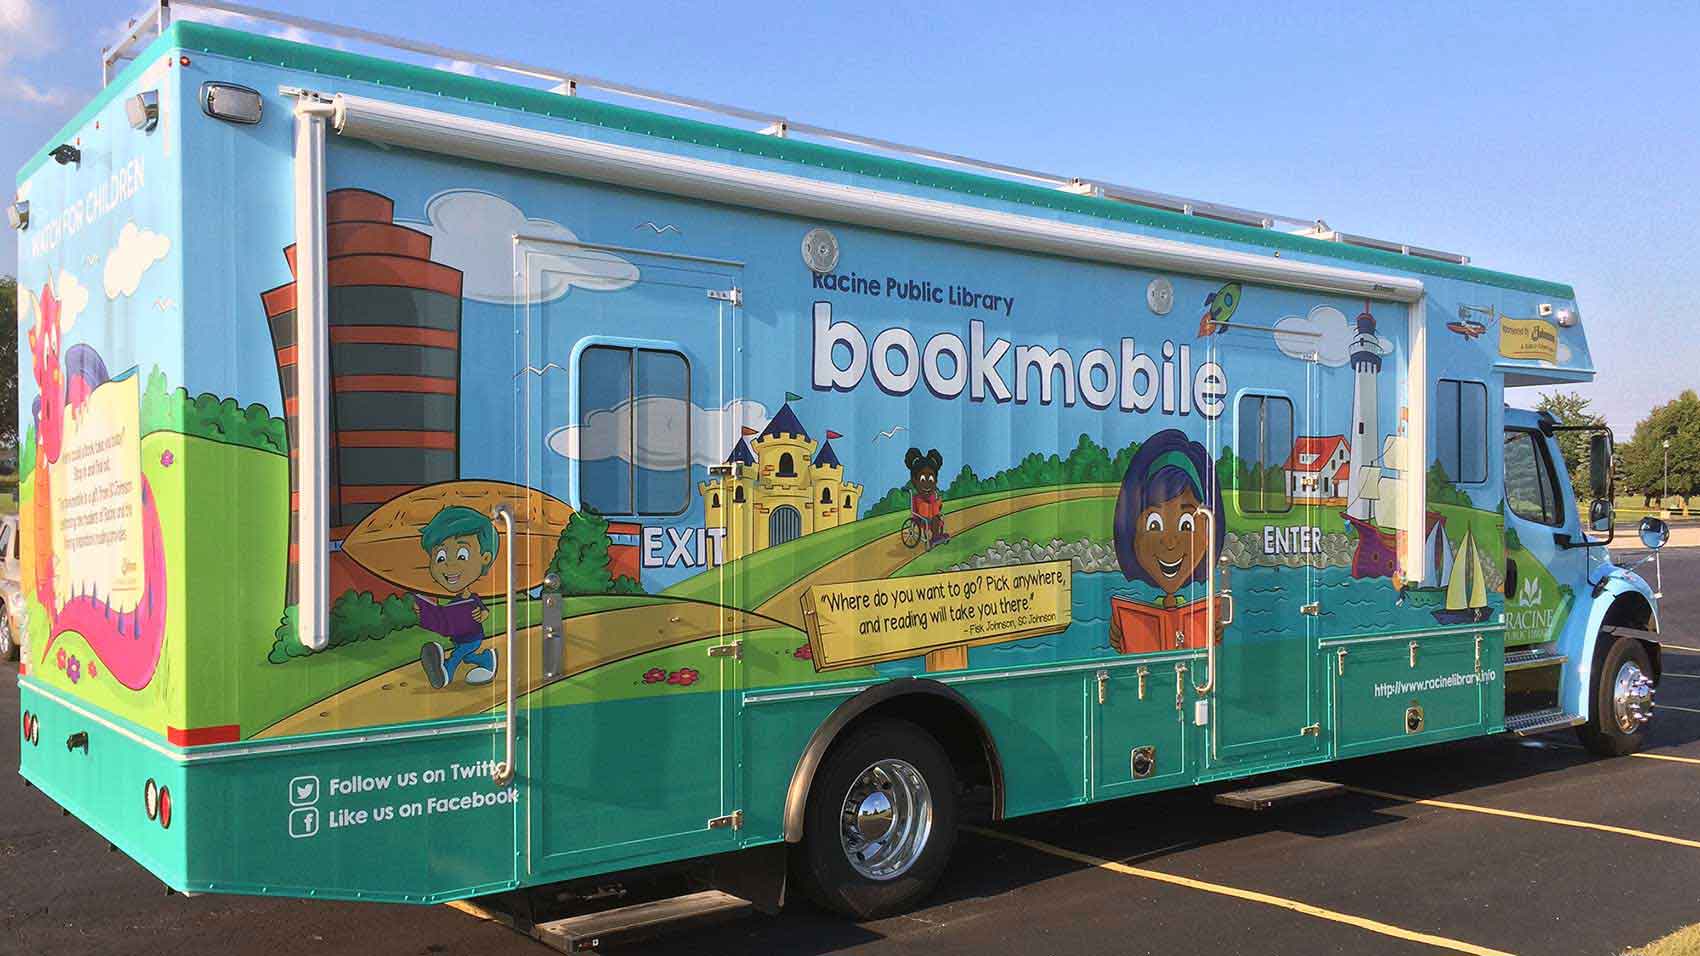 Racine Public Library Bookmobile